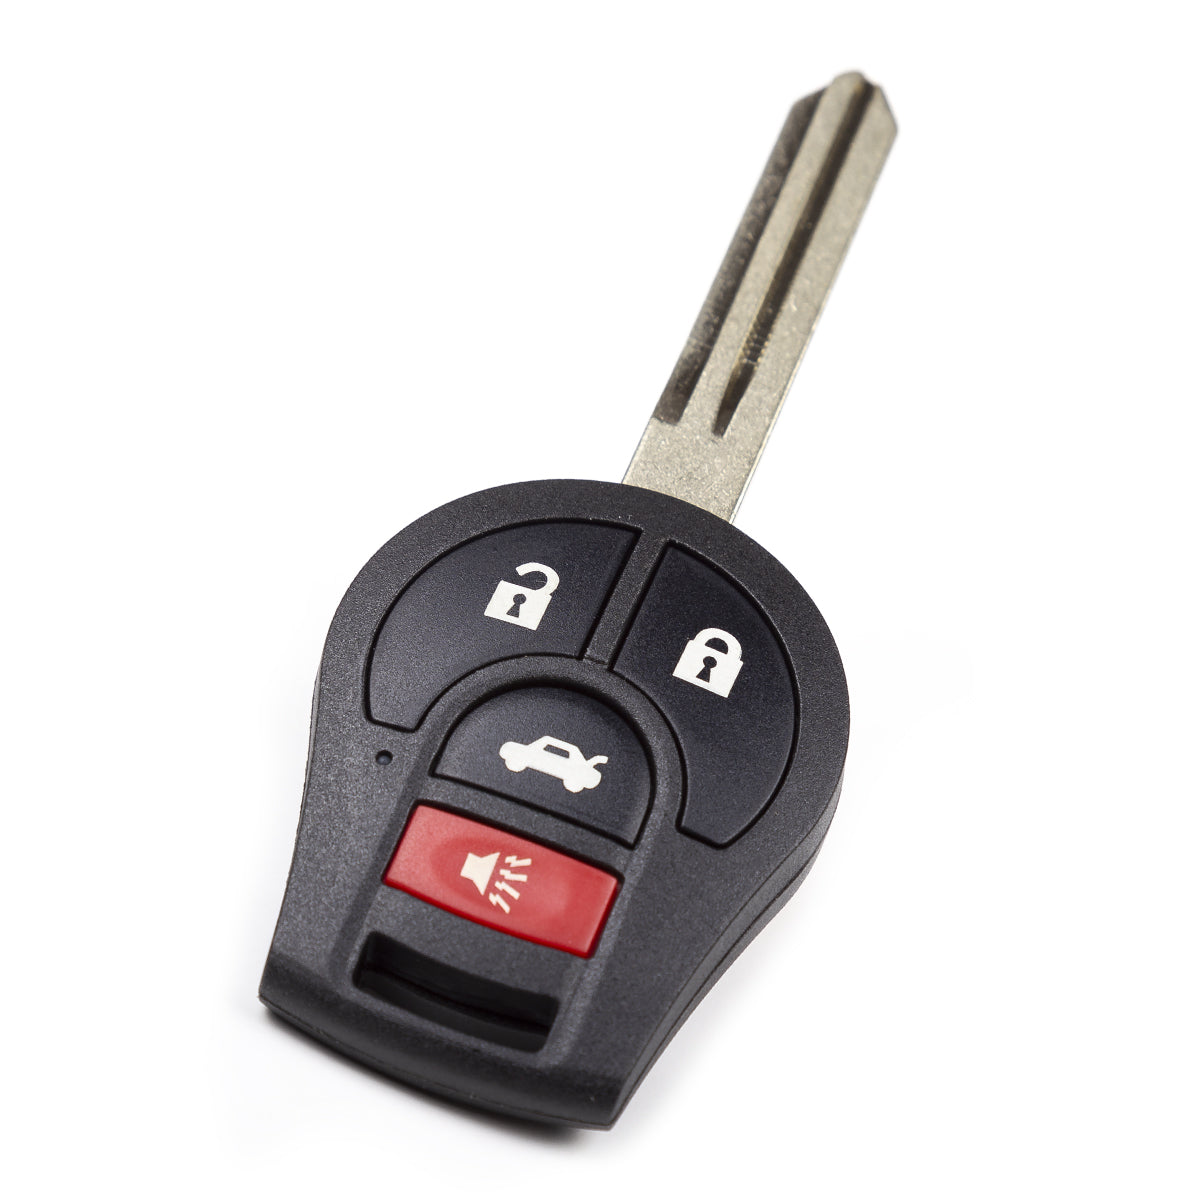 2006 Nissan Altima Key Fob - Aftermarket - 4 Buttons Fob FCC# CWTWB1U751 - ID46 Chip